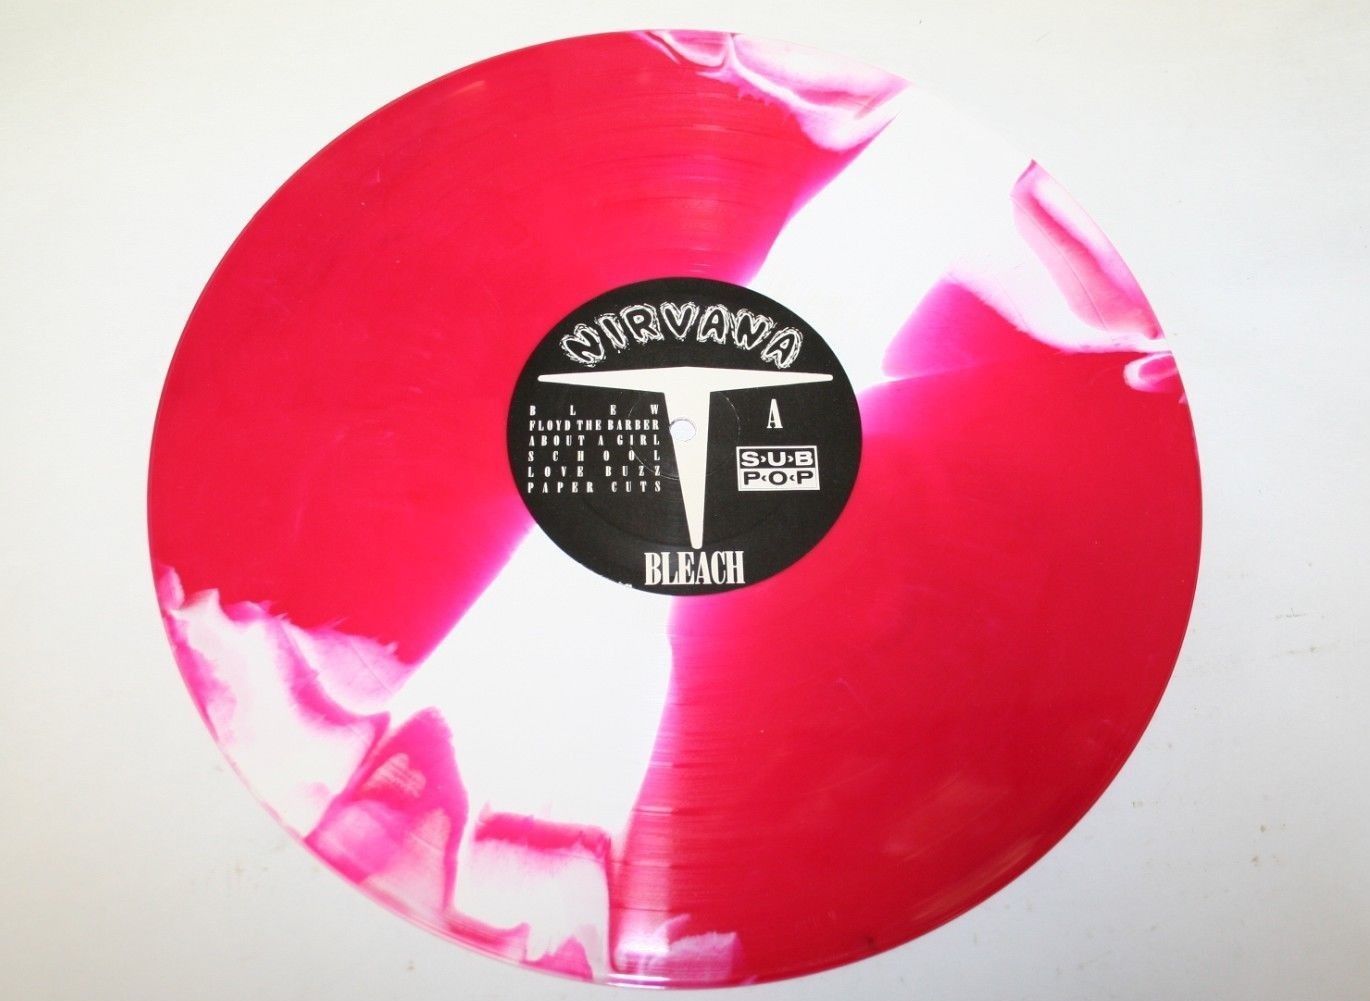  RED & WHITE SWIRL RARE NIRVANA BLEACH COLOURED VINYL SP34 RECORD  SUB POP EXC CON - auction details